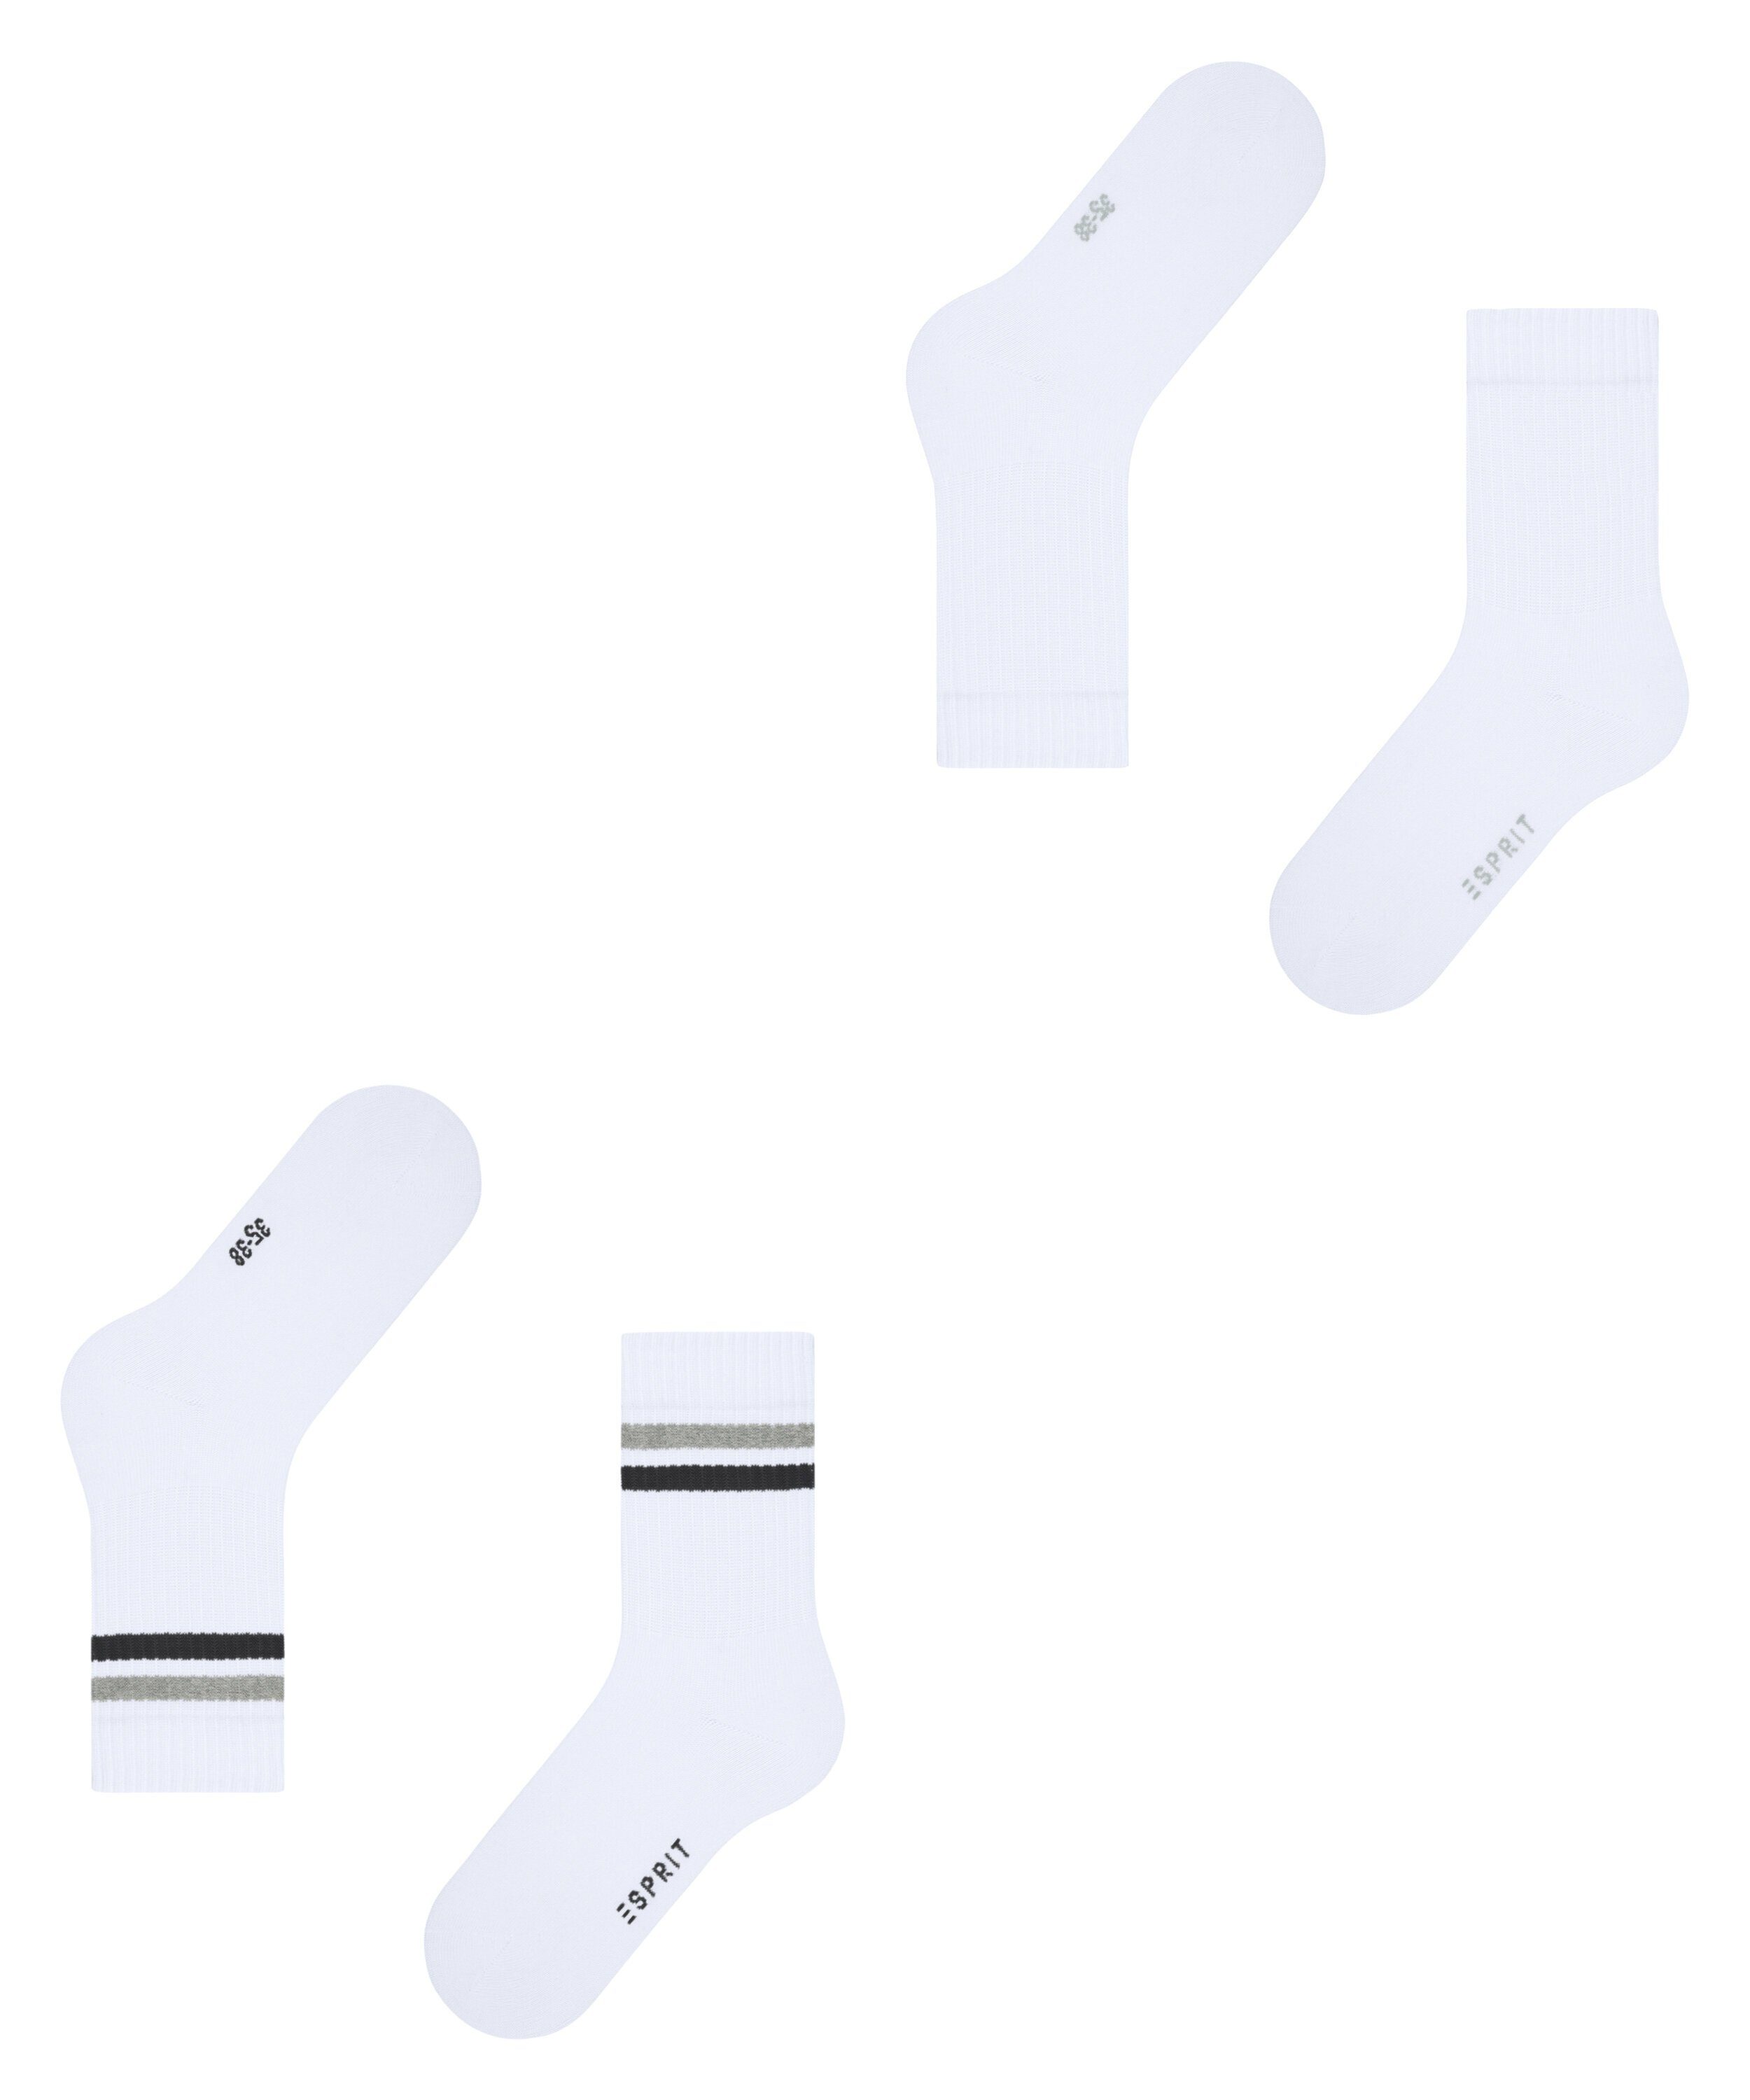 Stripe Tennis Socken (2070) 2-Pack (2-Paar) schnee Esprit